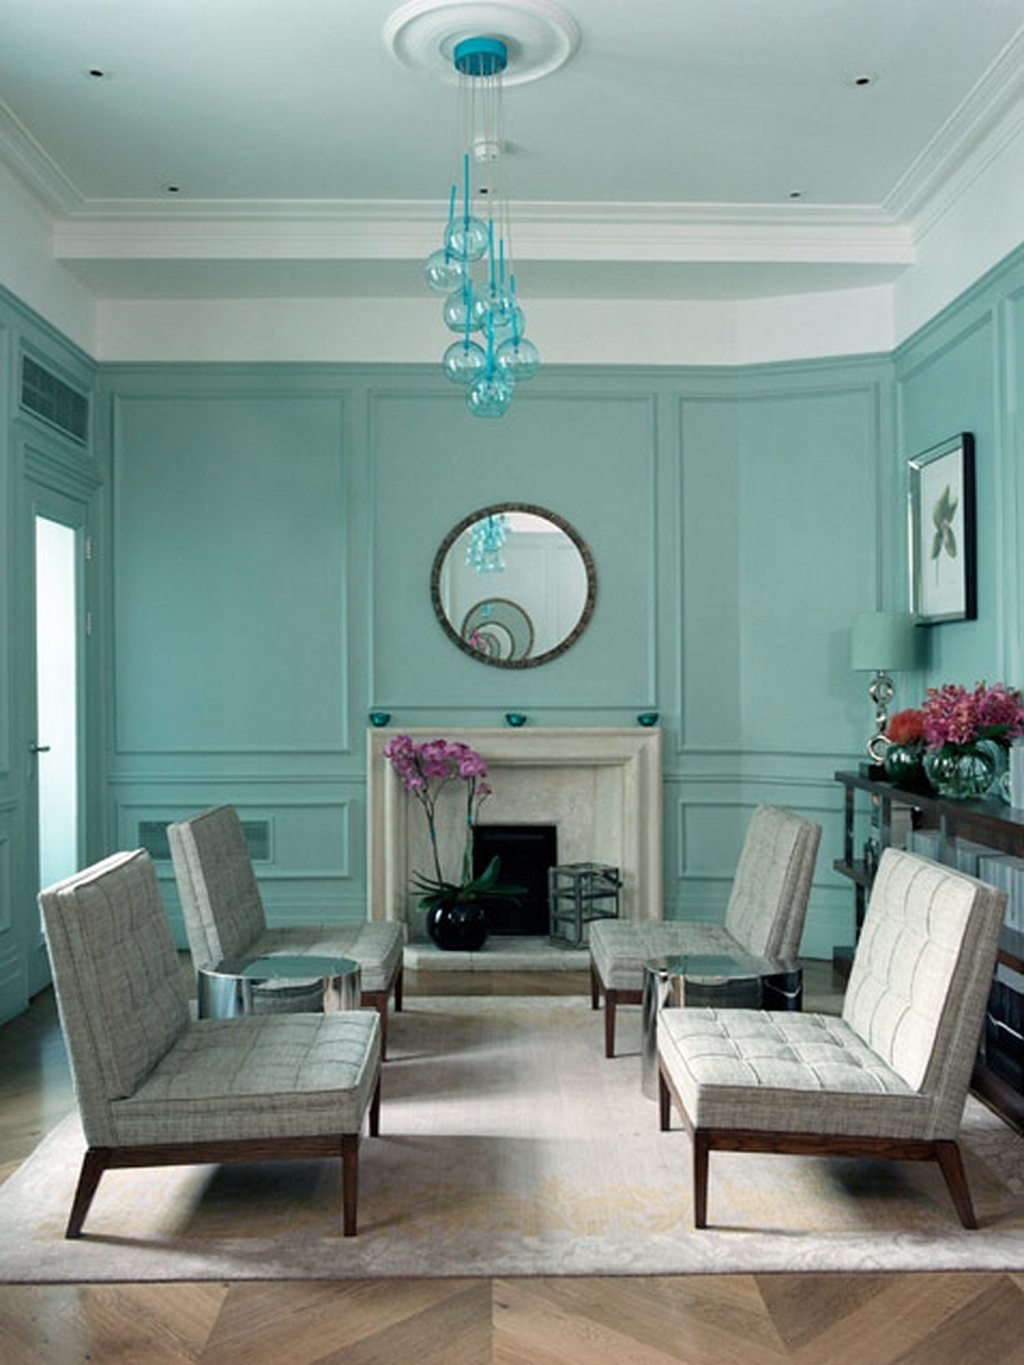 10 Elegant Blue And Green Living Room Ideas traditional blue green living room in midcentury style dweef 2022